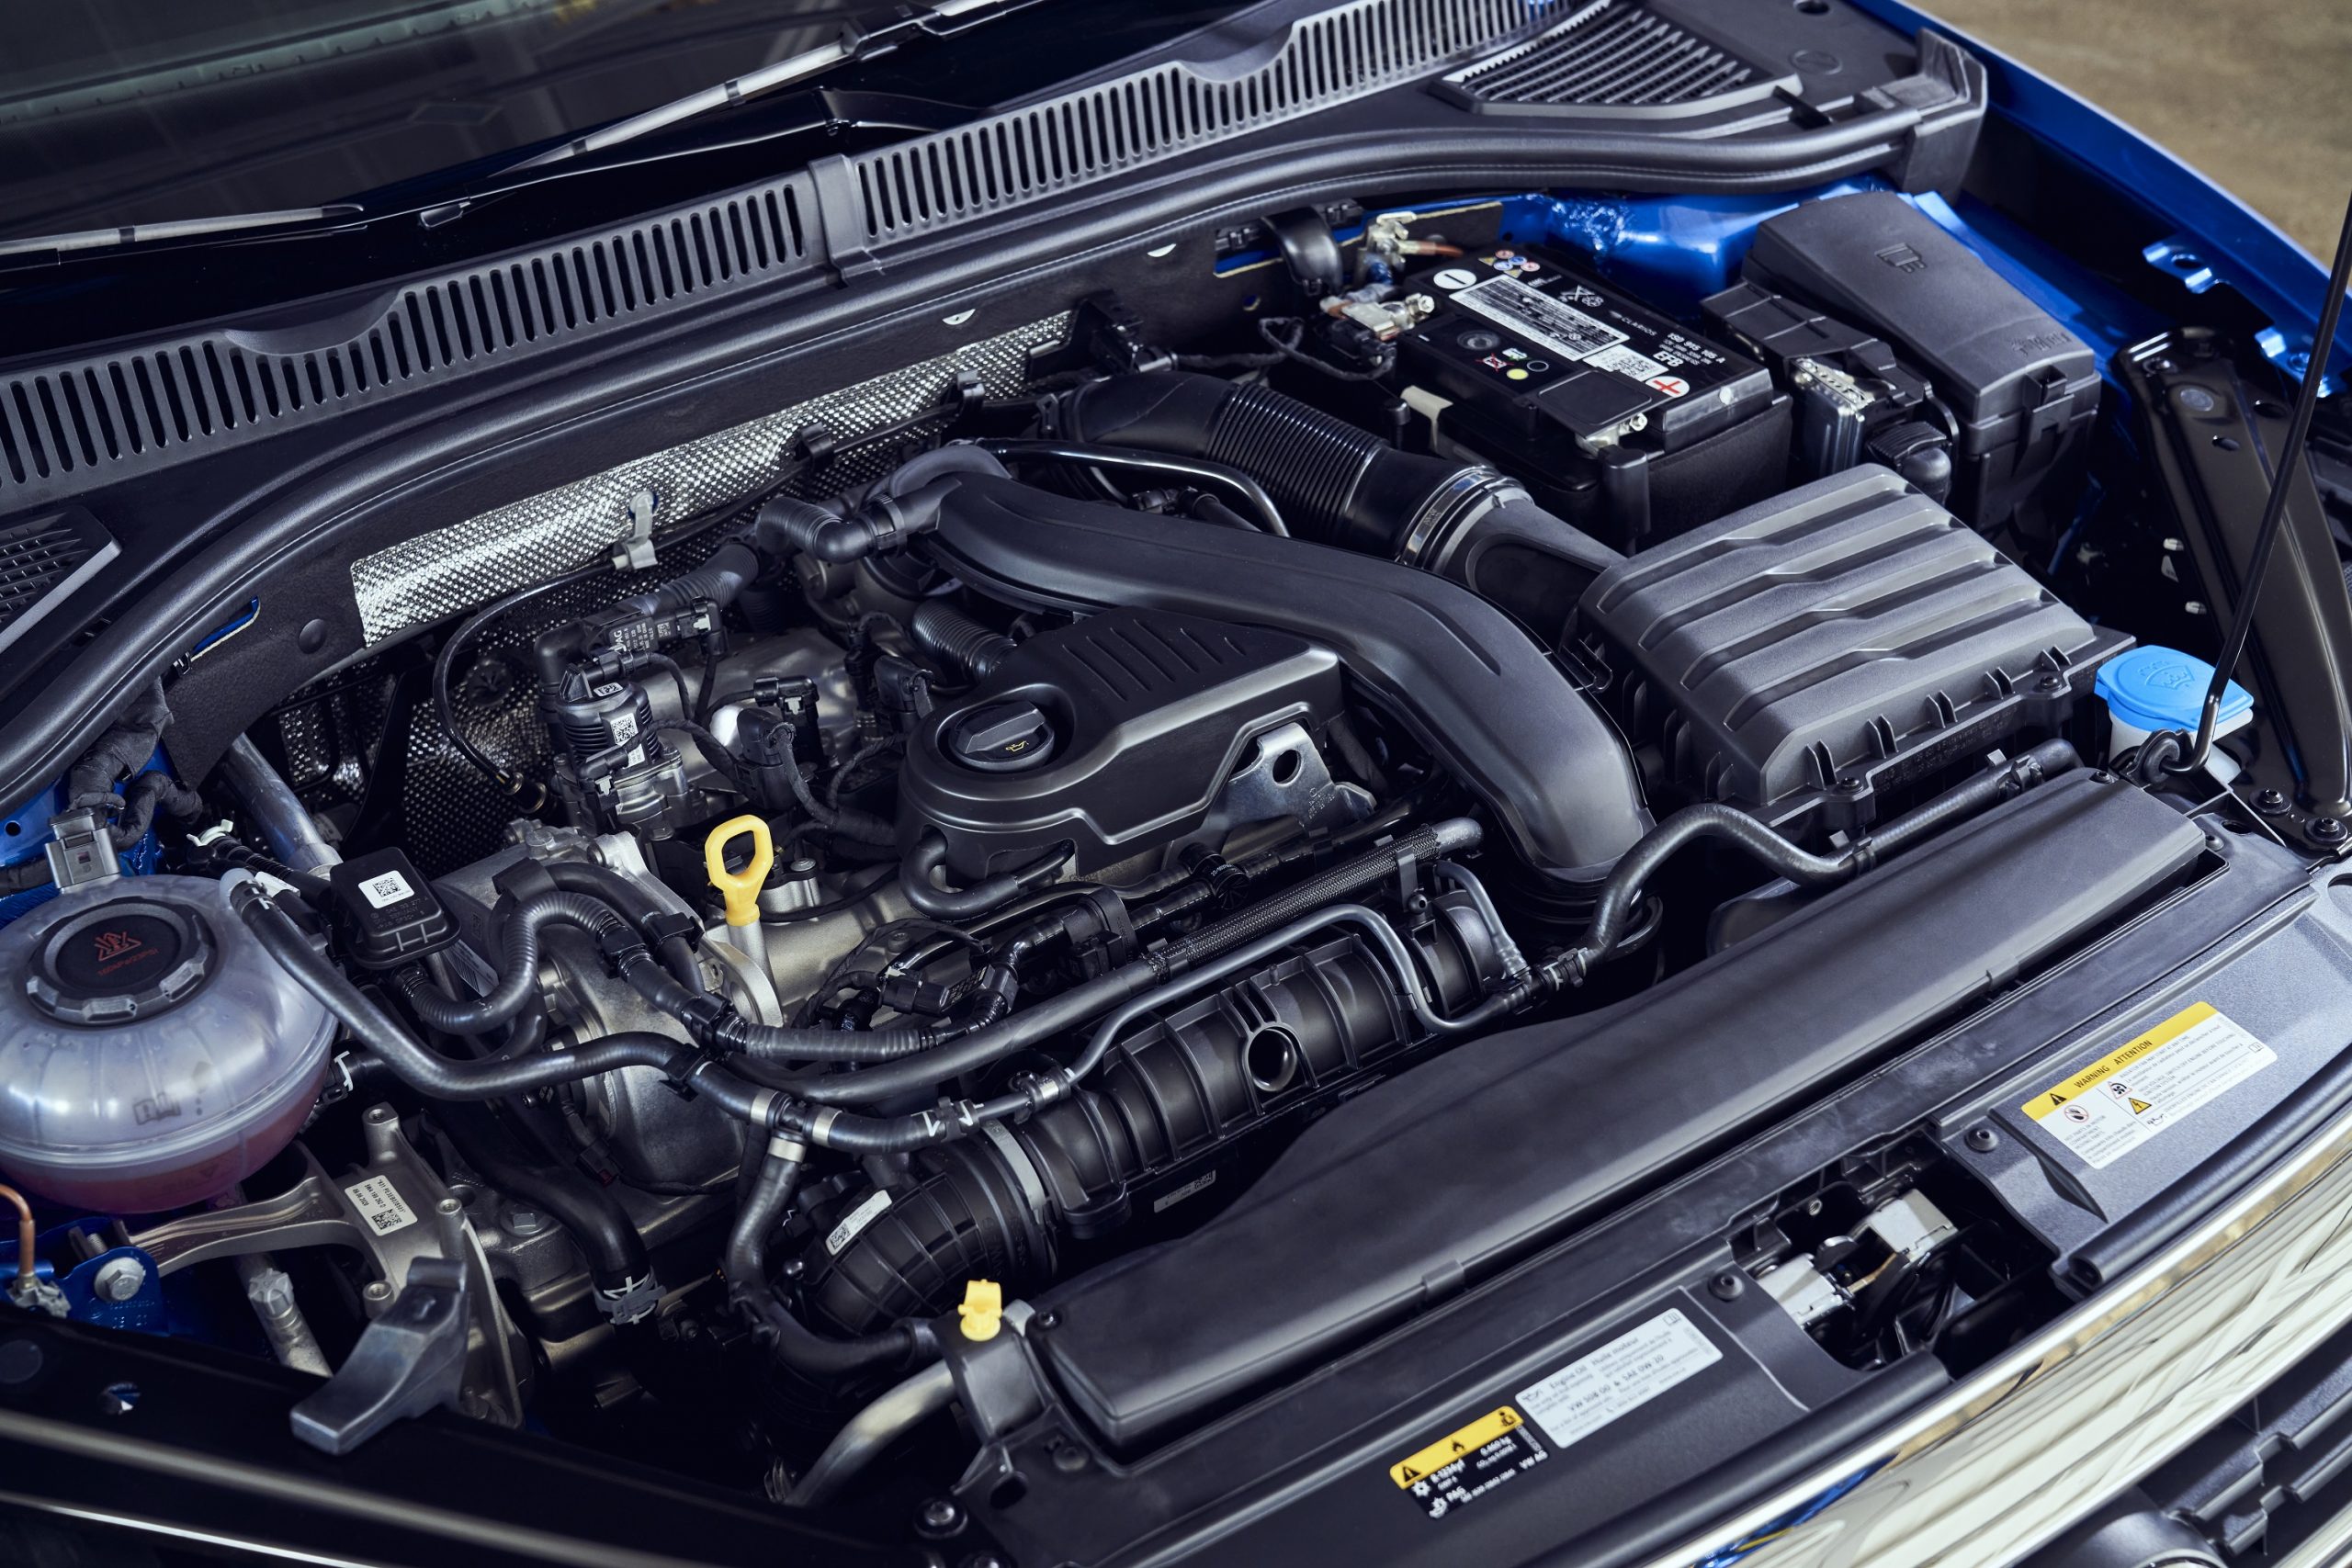 The engine of the 2022 Volkswagen Jetta